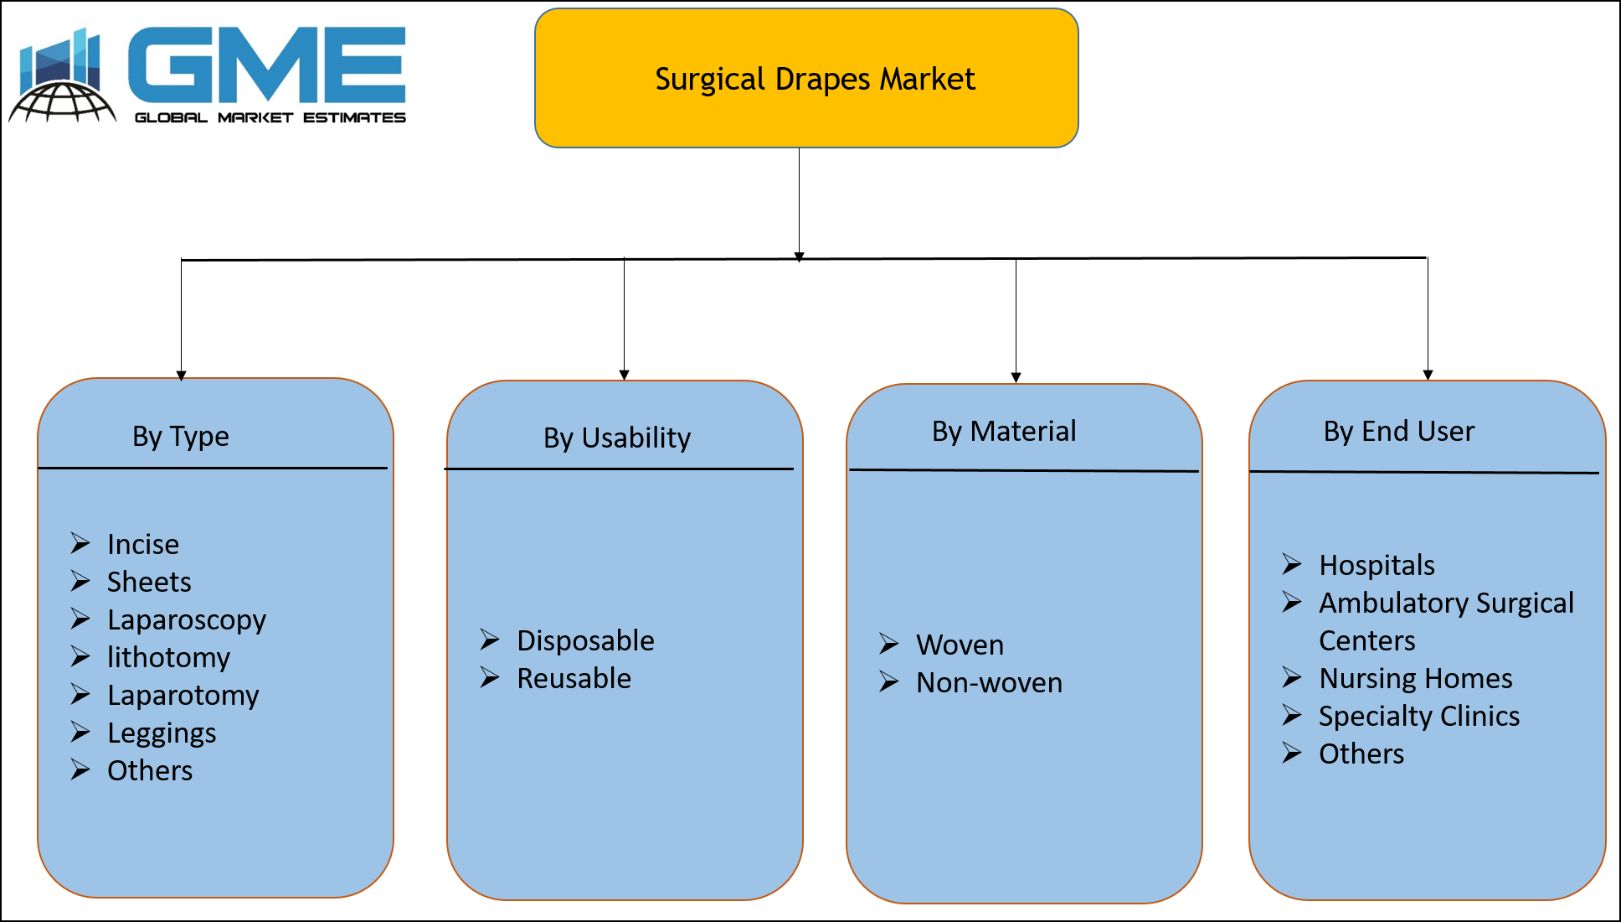 Surgical Drapes Market Segmentation